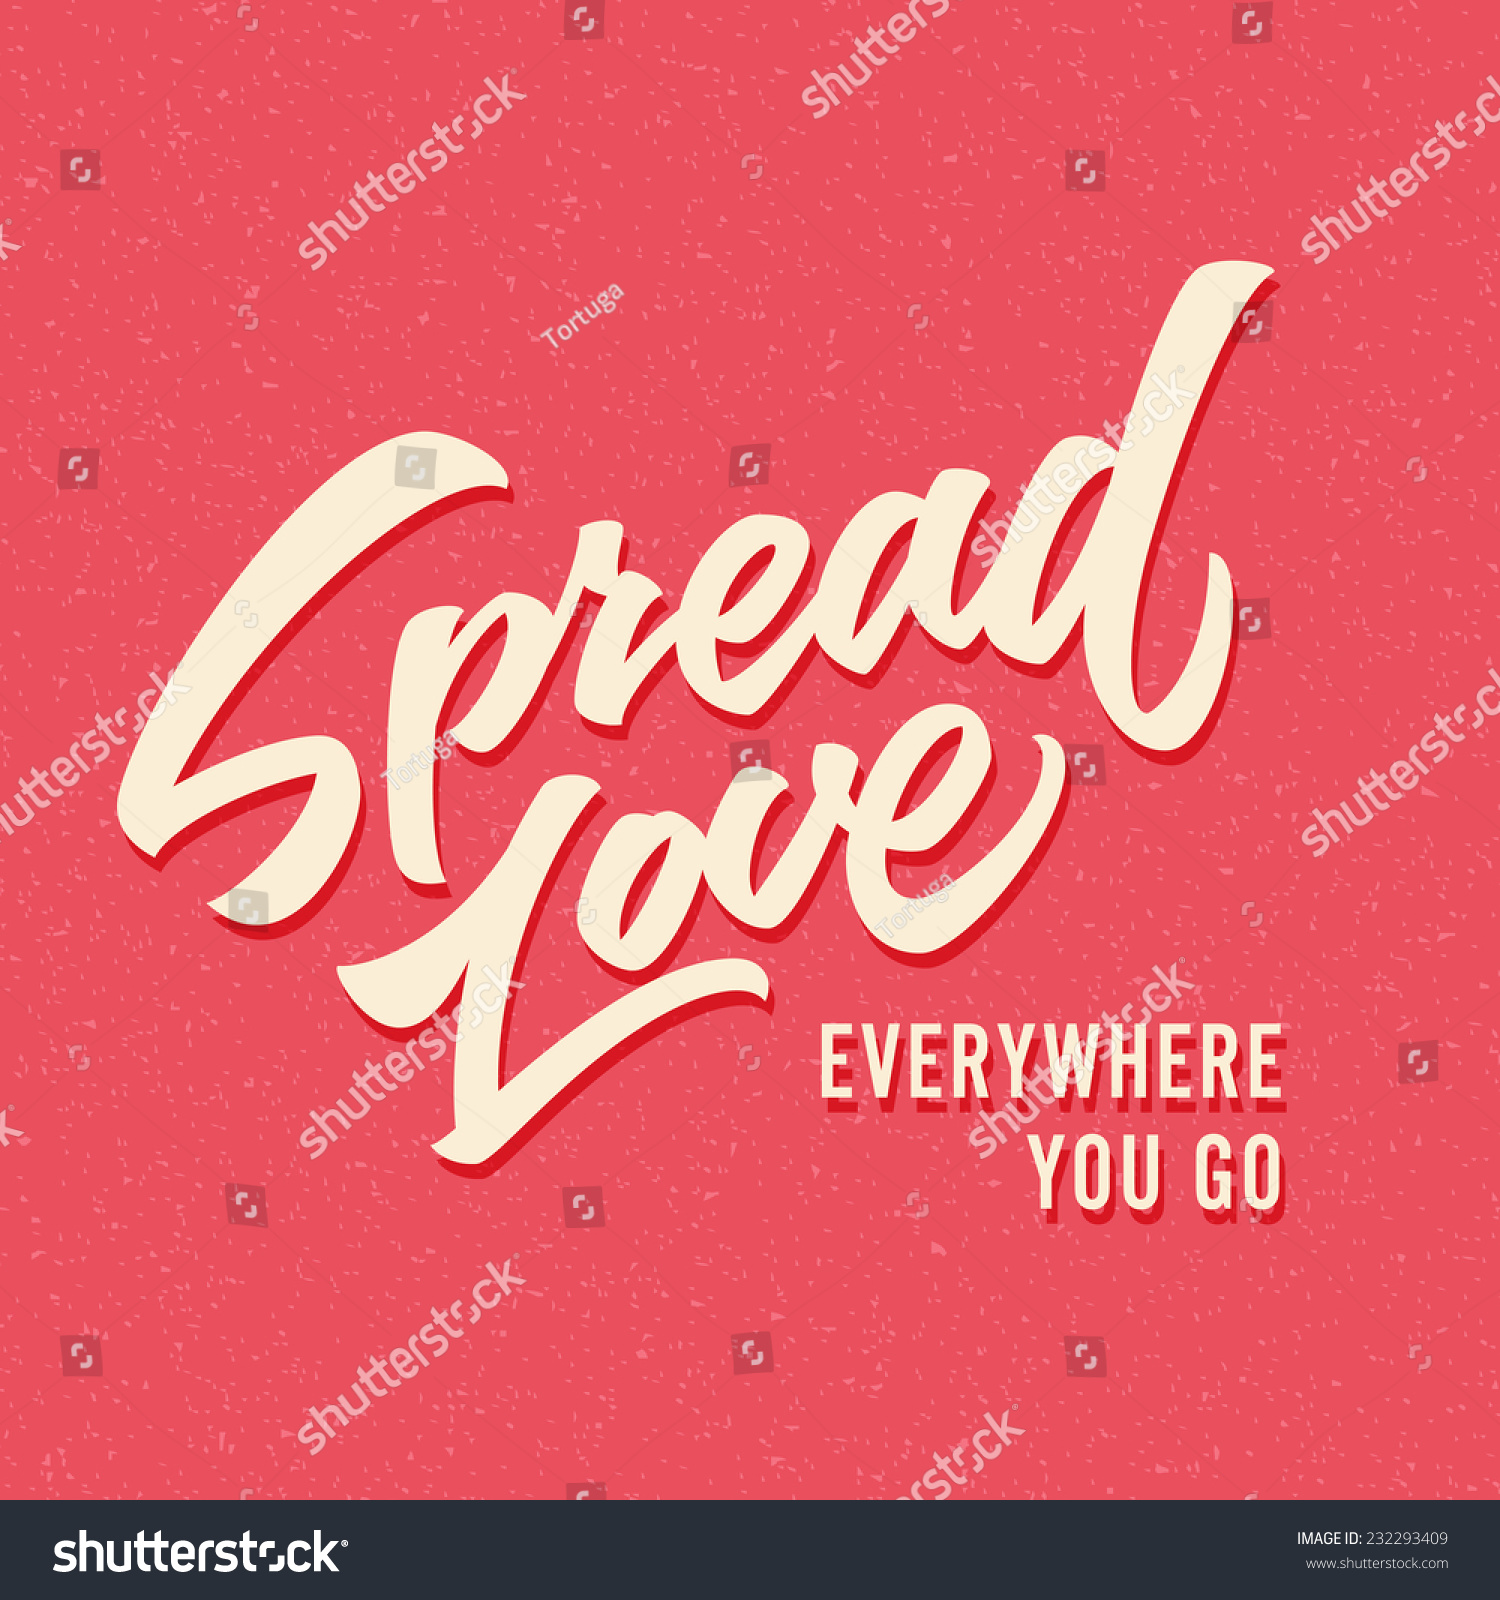 image.shutterstock.com/z/stock-vector--spread-love-everywhere-you-go-motivational-hand-drawn-brush-script-lettering-for-t-shirt-apparel-232293409.jpg